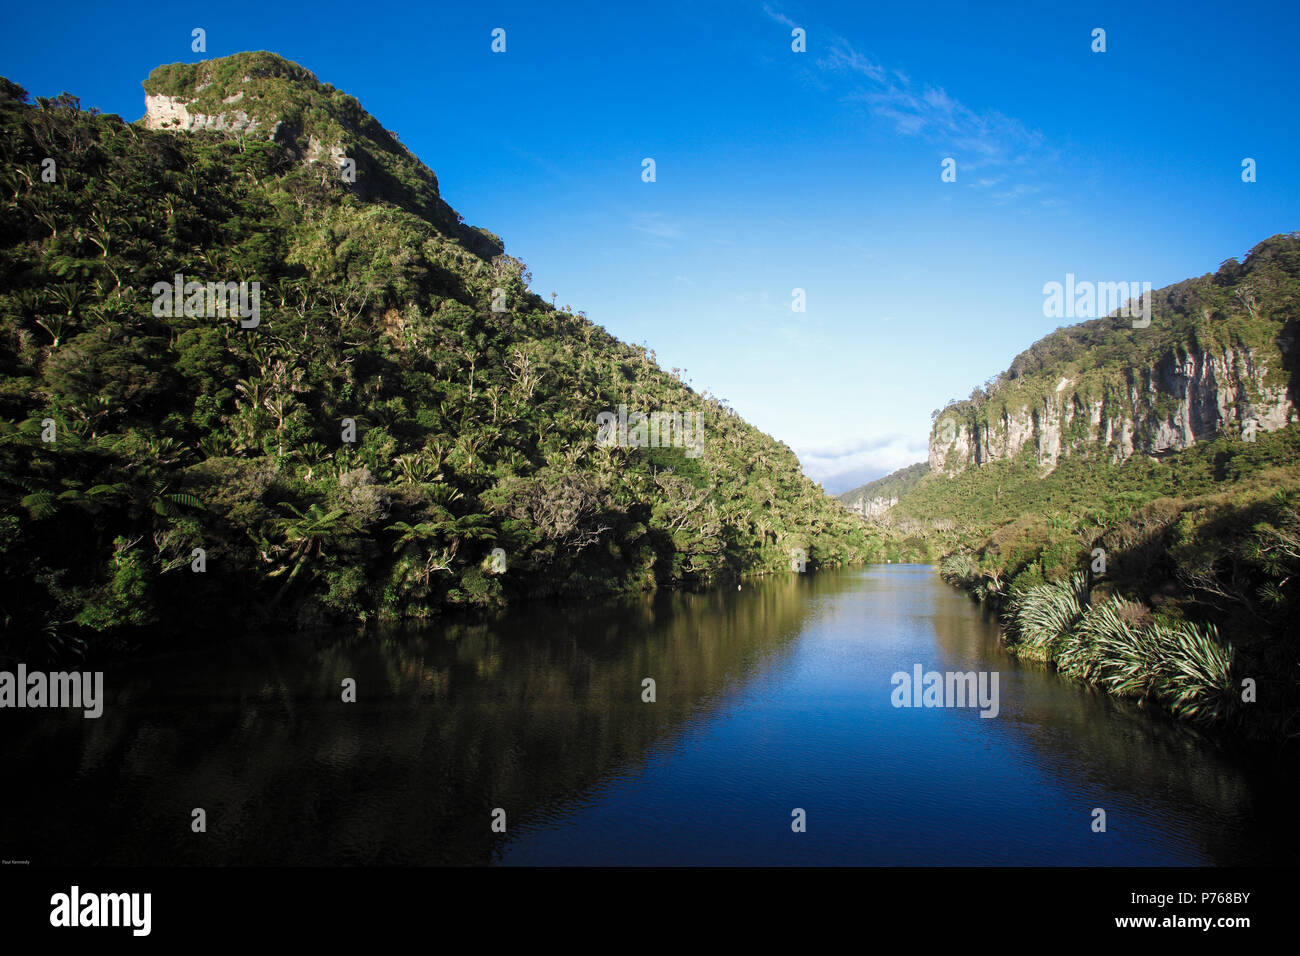 The Pororari River in Paparoa National Park, Punakaiki, New Zealand Stock Photo